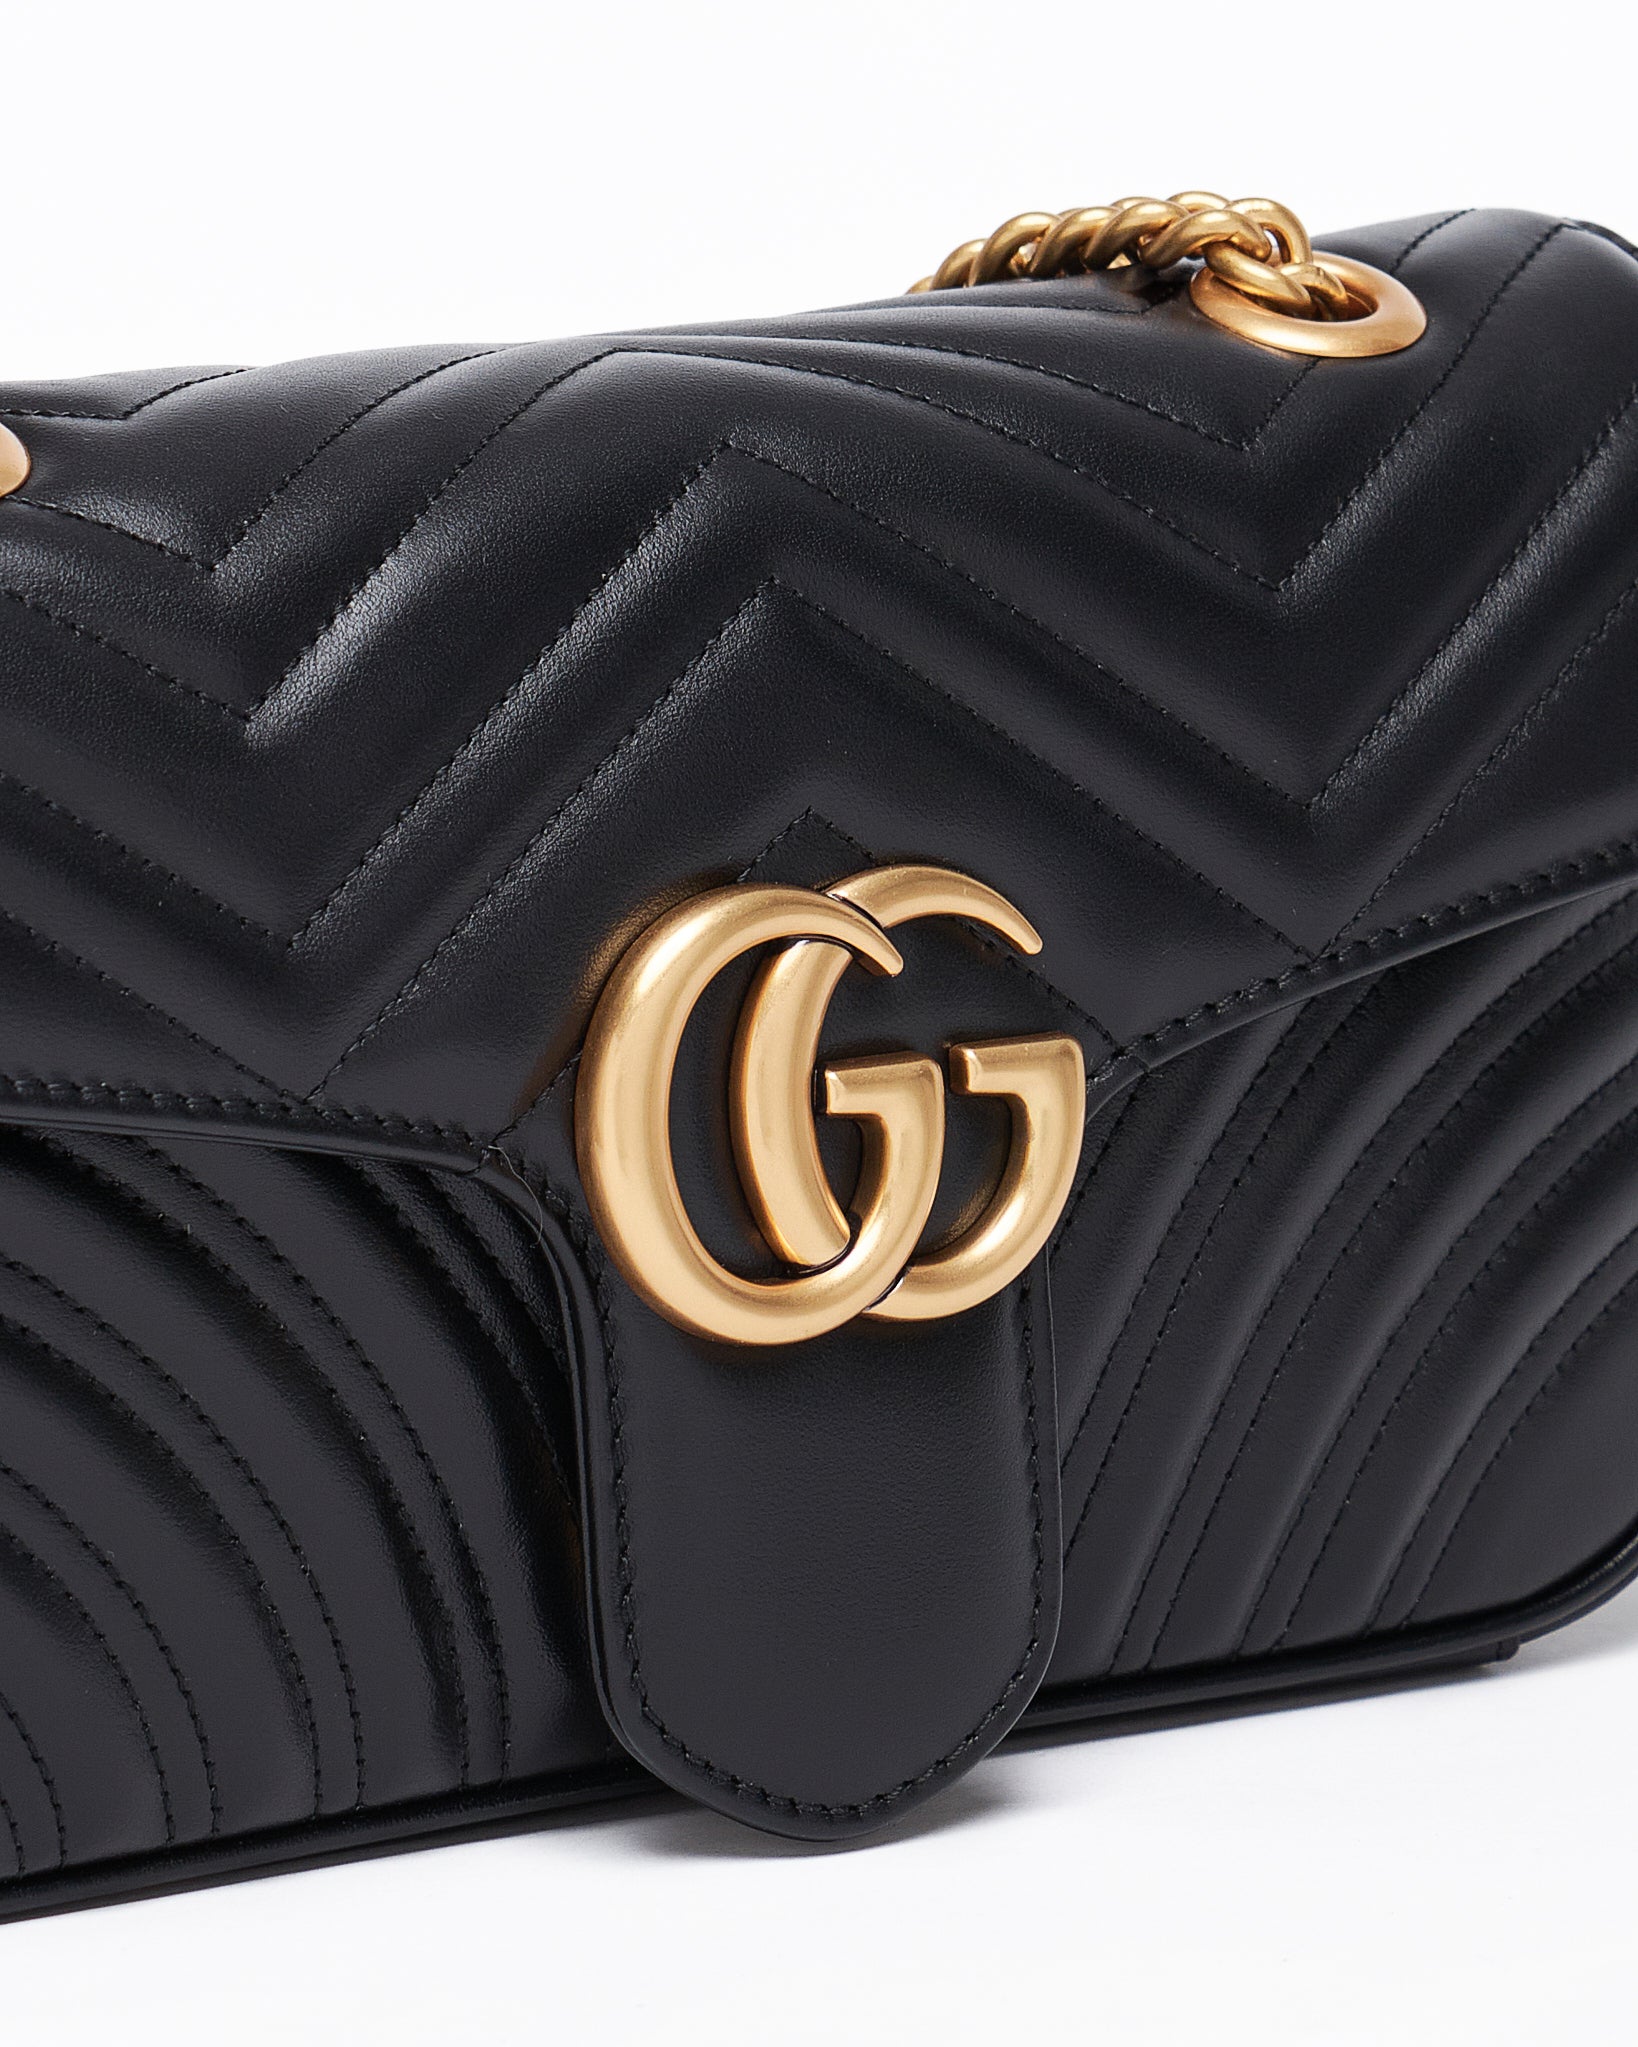 GUC Marmont Lady Black Shoulder Bag 185